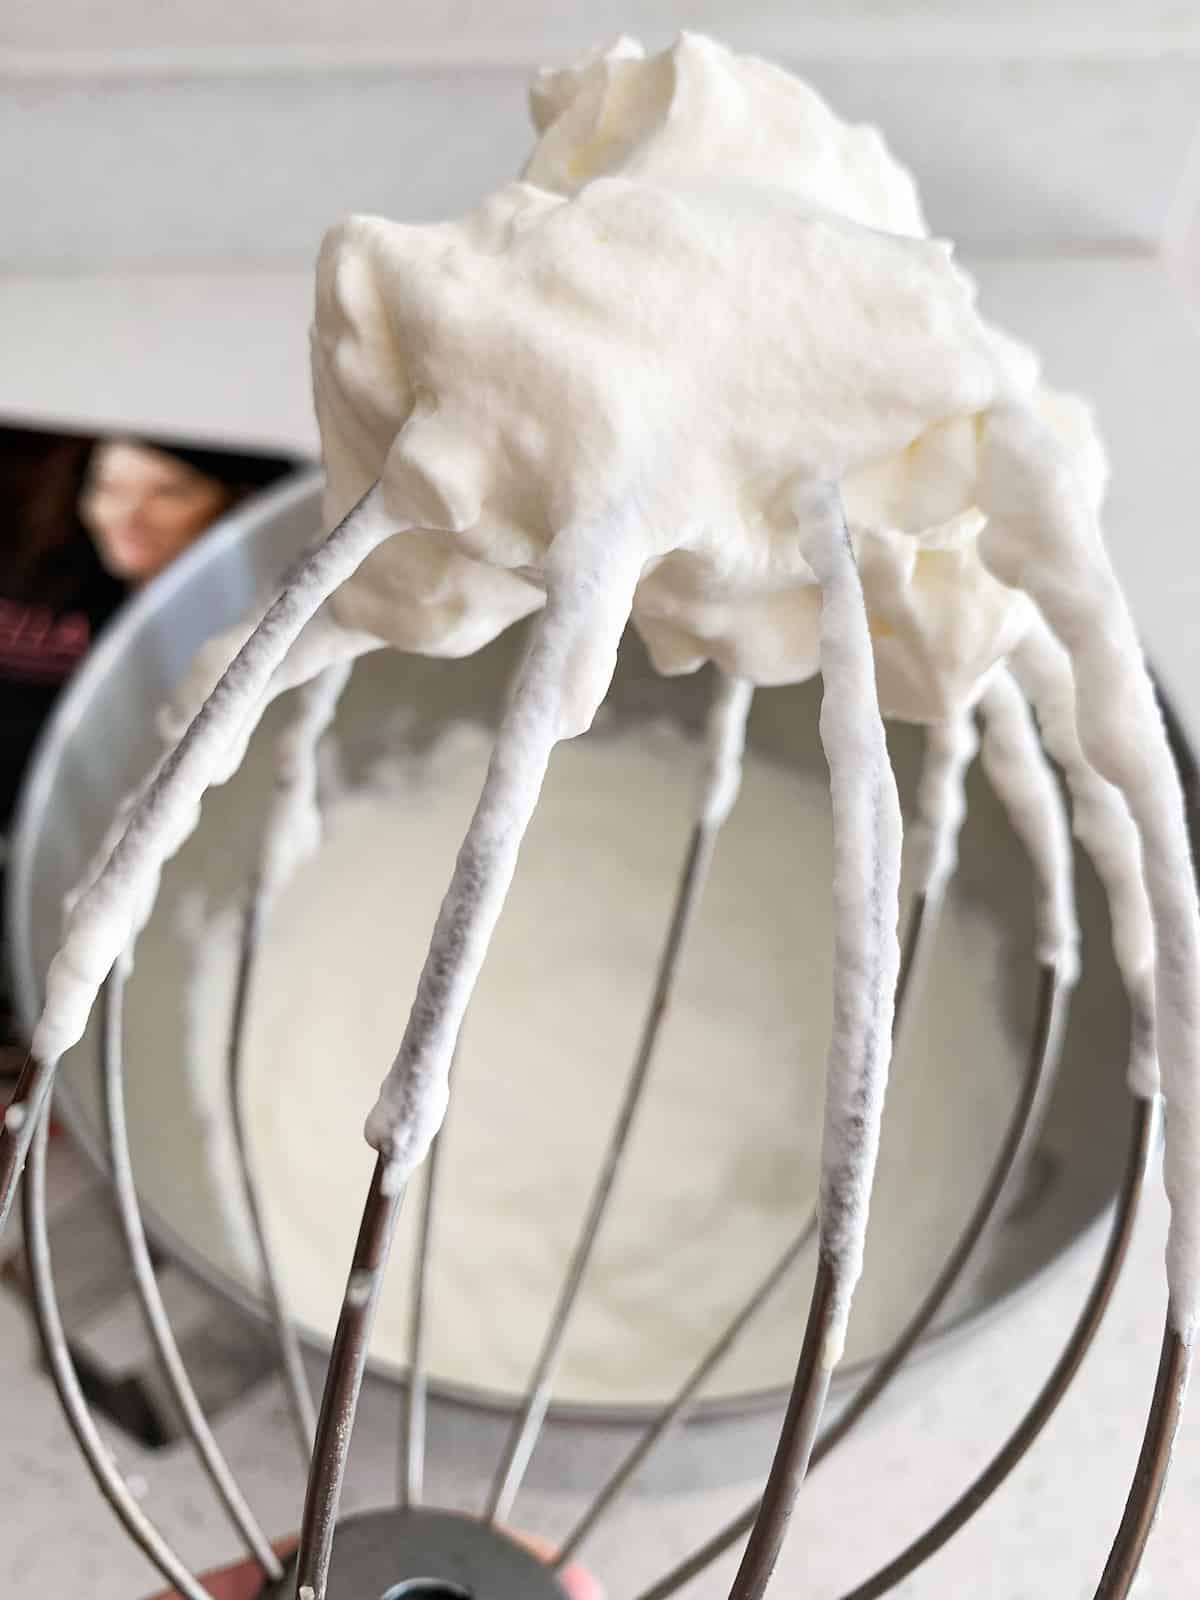 stiff peaks of whipped cream